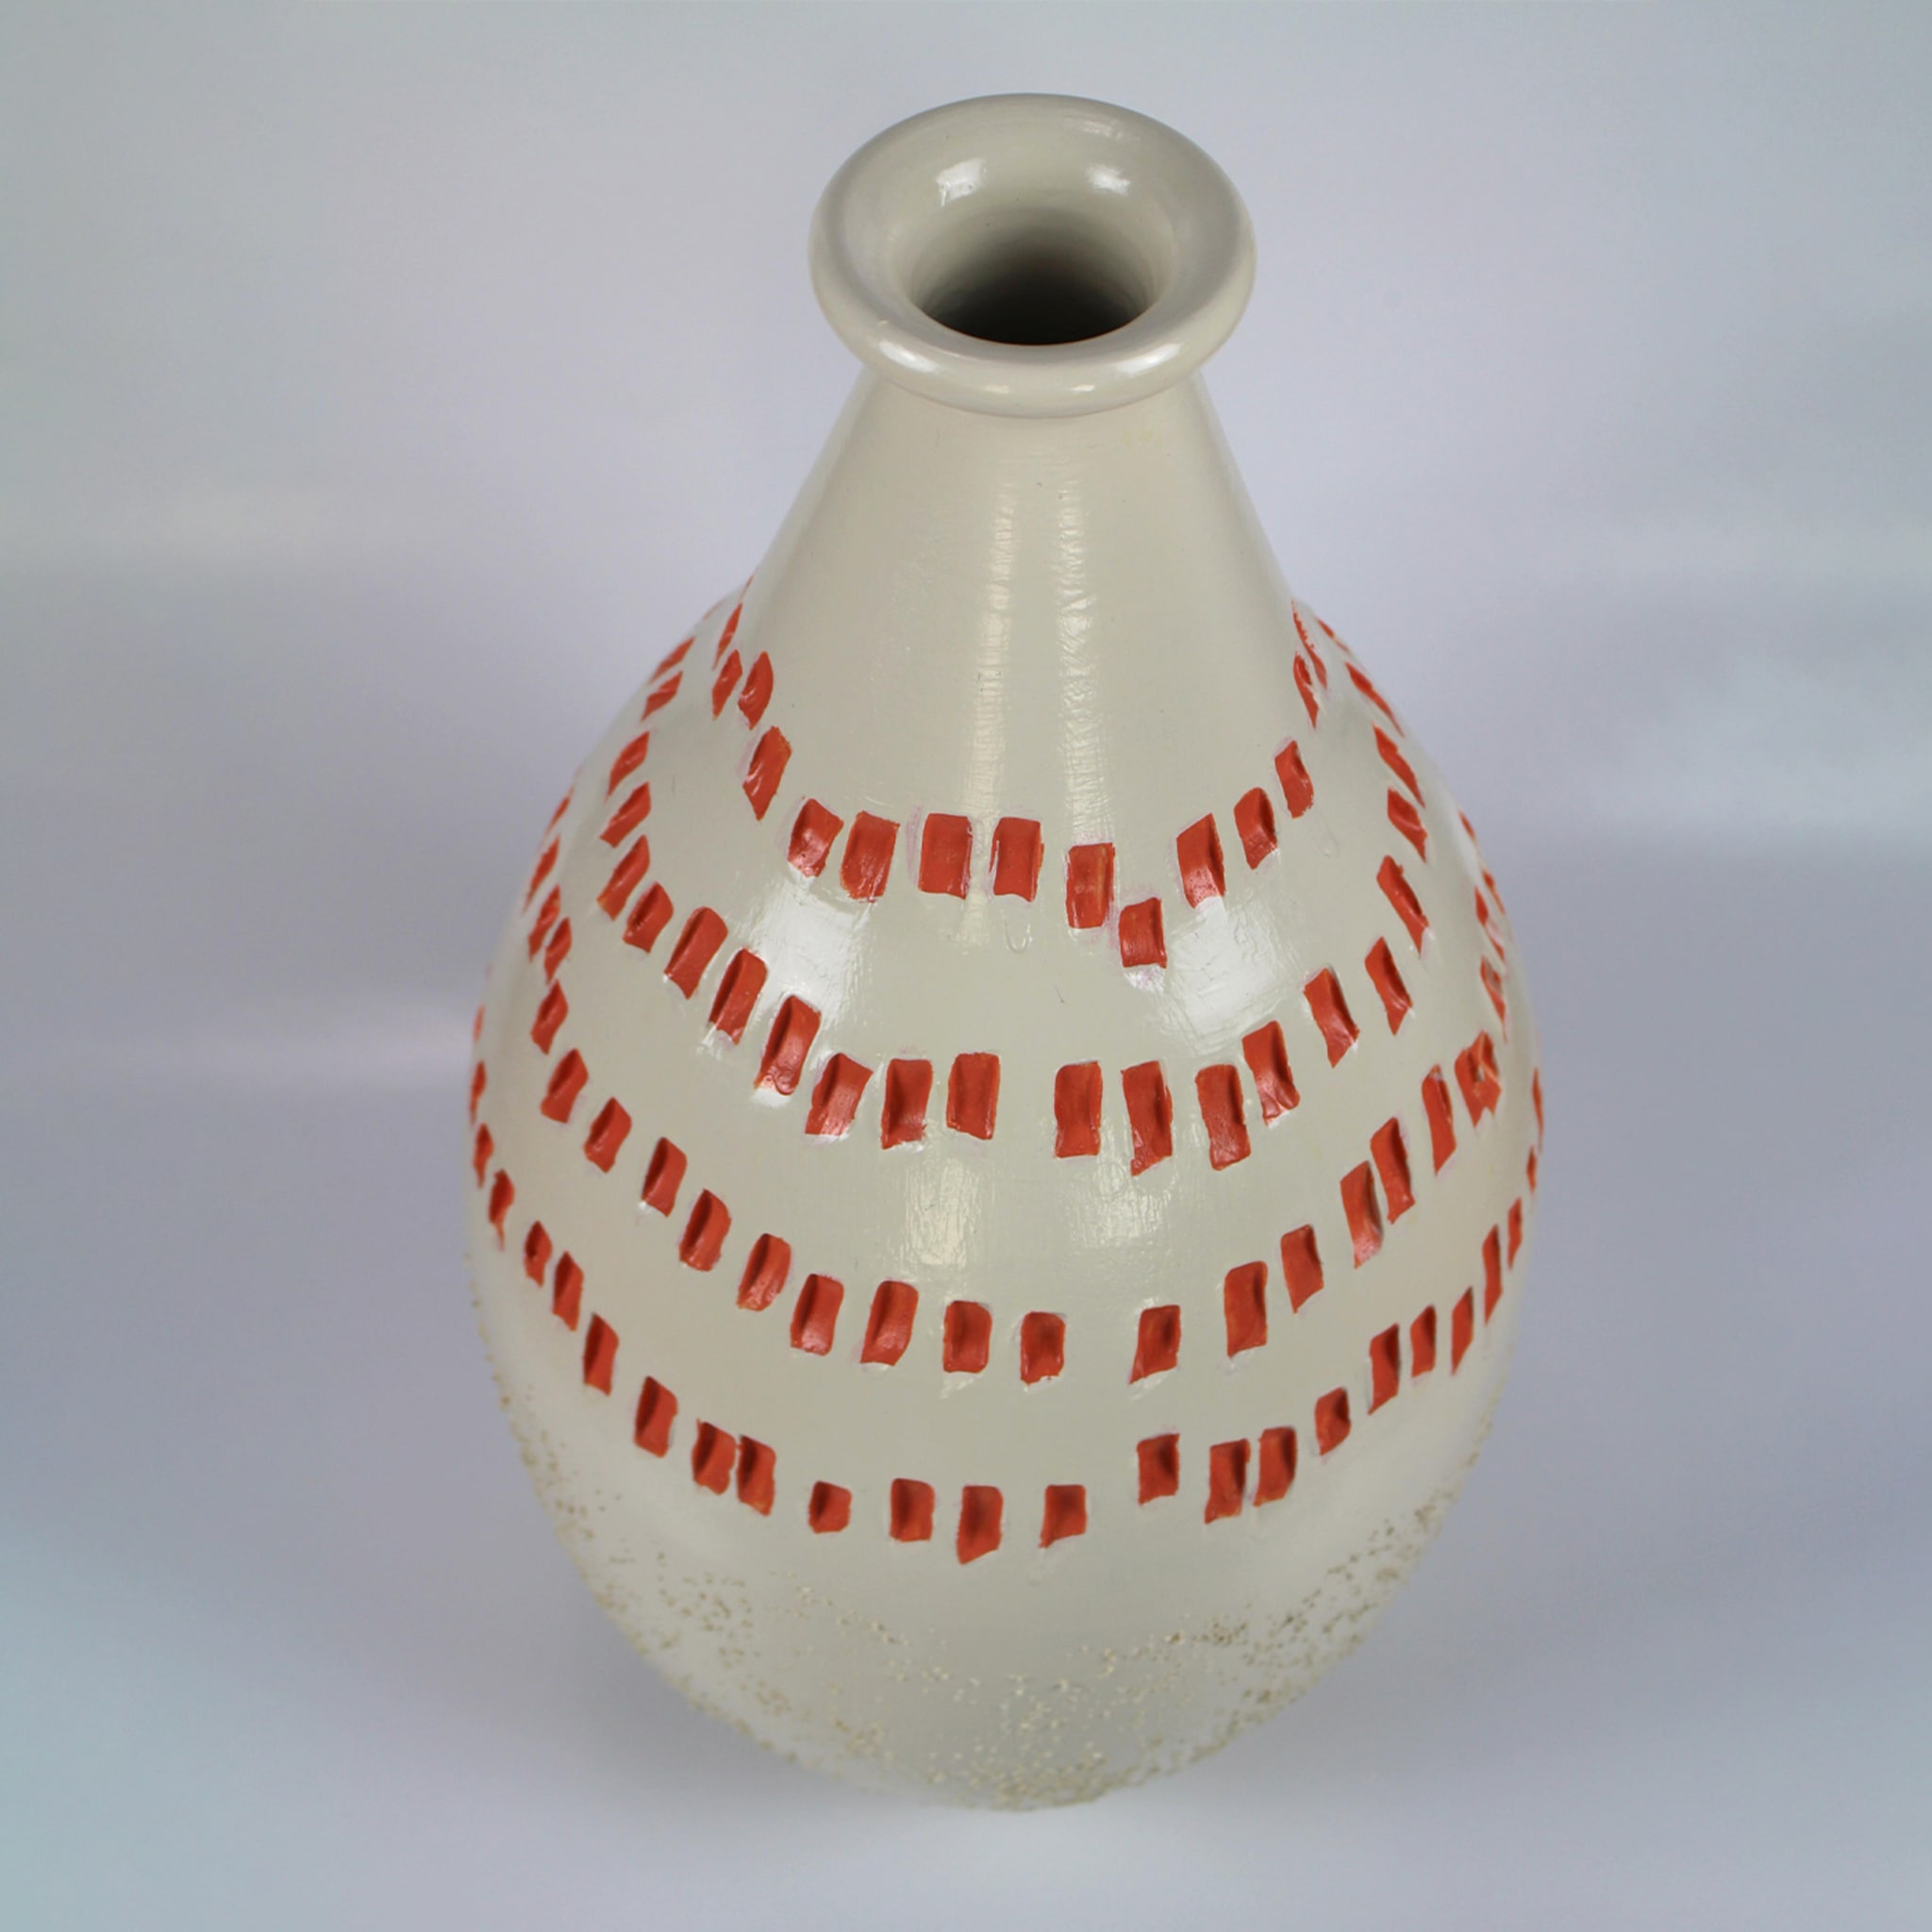 Drop-Shaped Beige & Red Vase 17 by Mascia Meccani - Alternative view 1